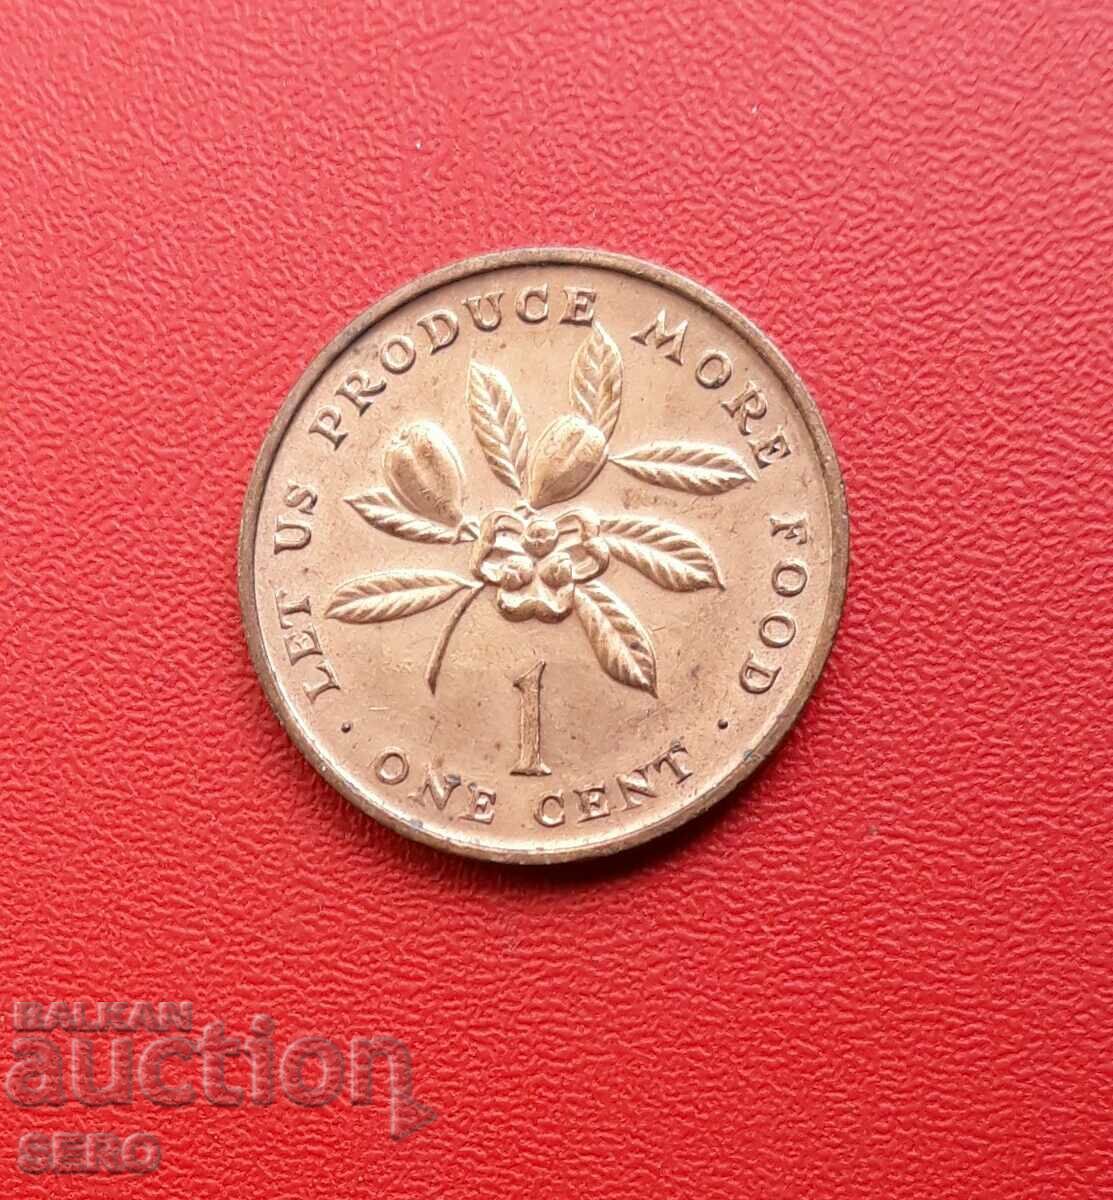 Island of Jamaica-1 cent 1973 F.A.O-ext.preserved